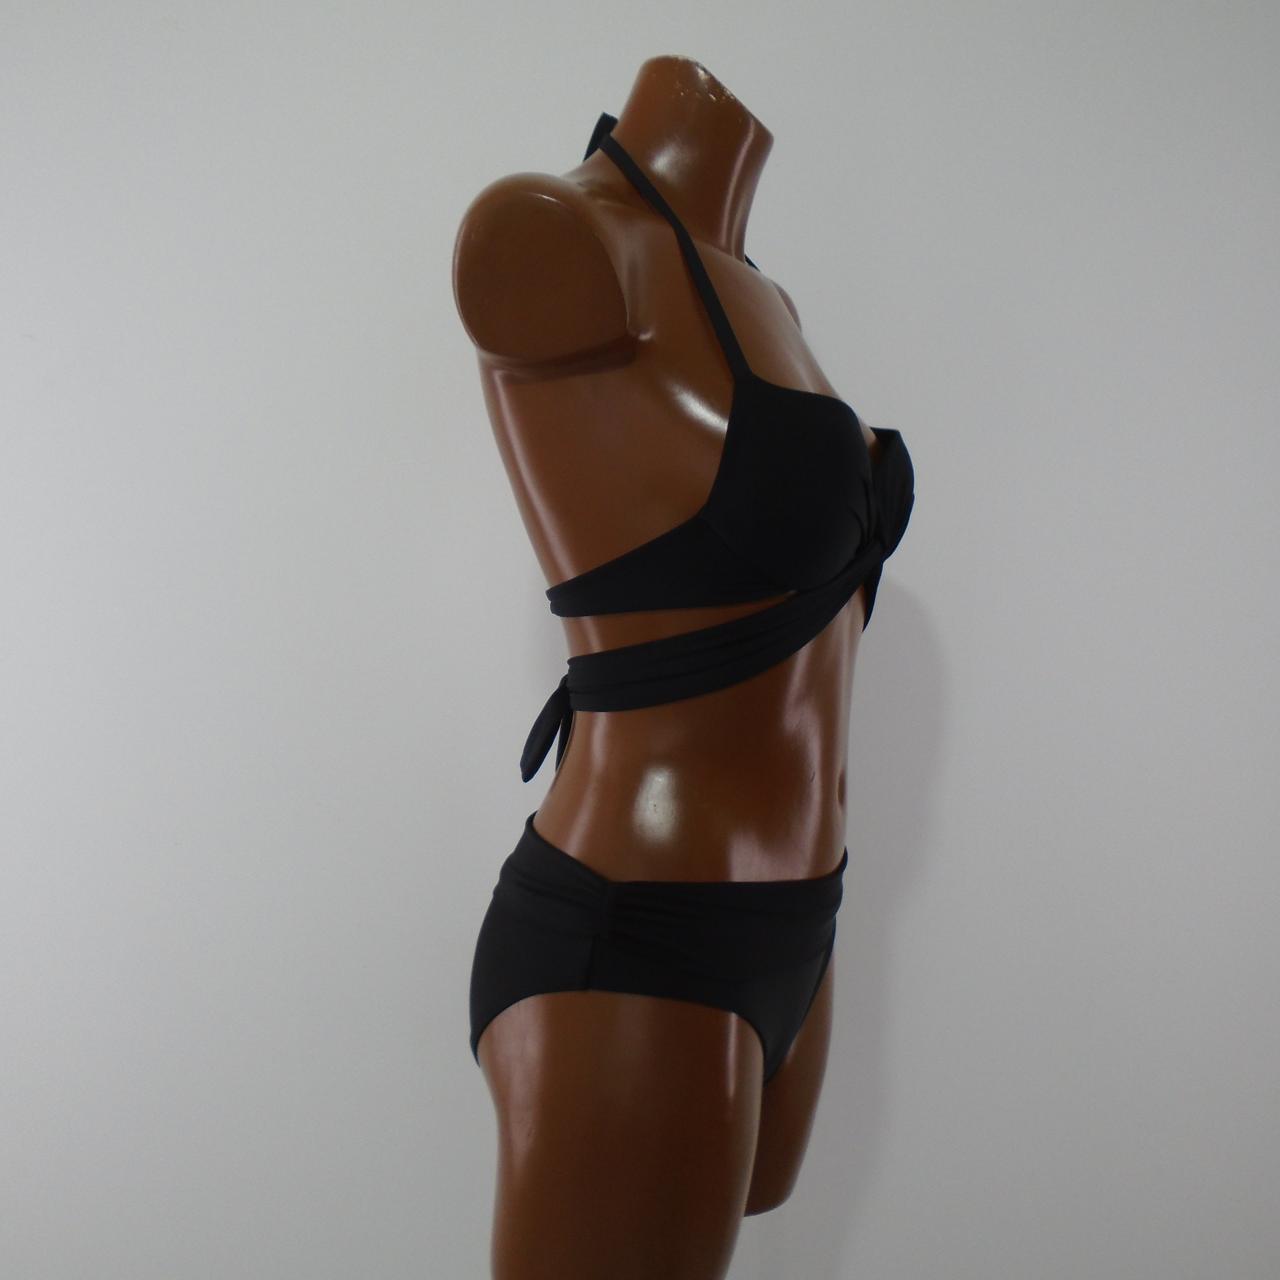 Women's Swimsuit Calzedonia. Black. S. Used. Good